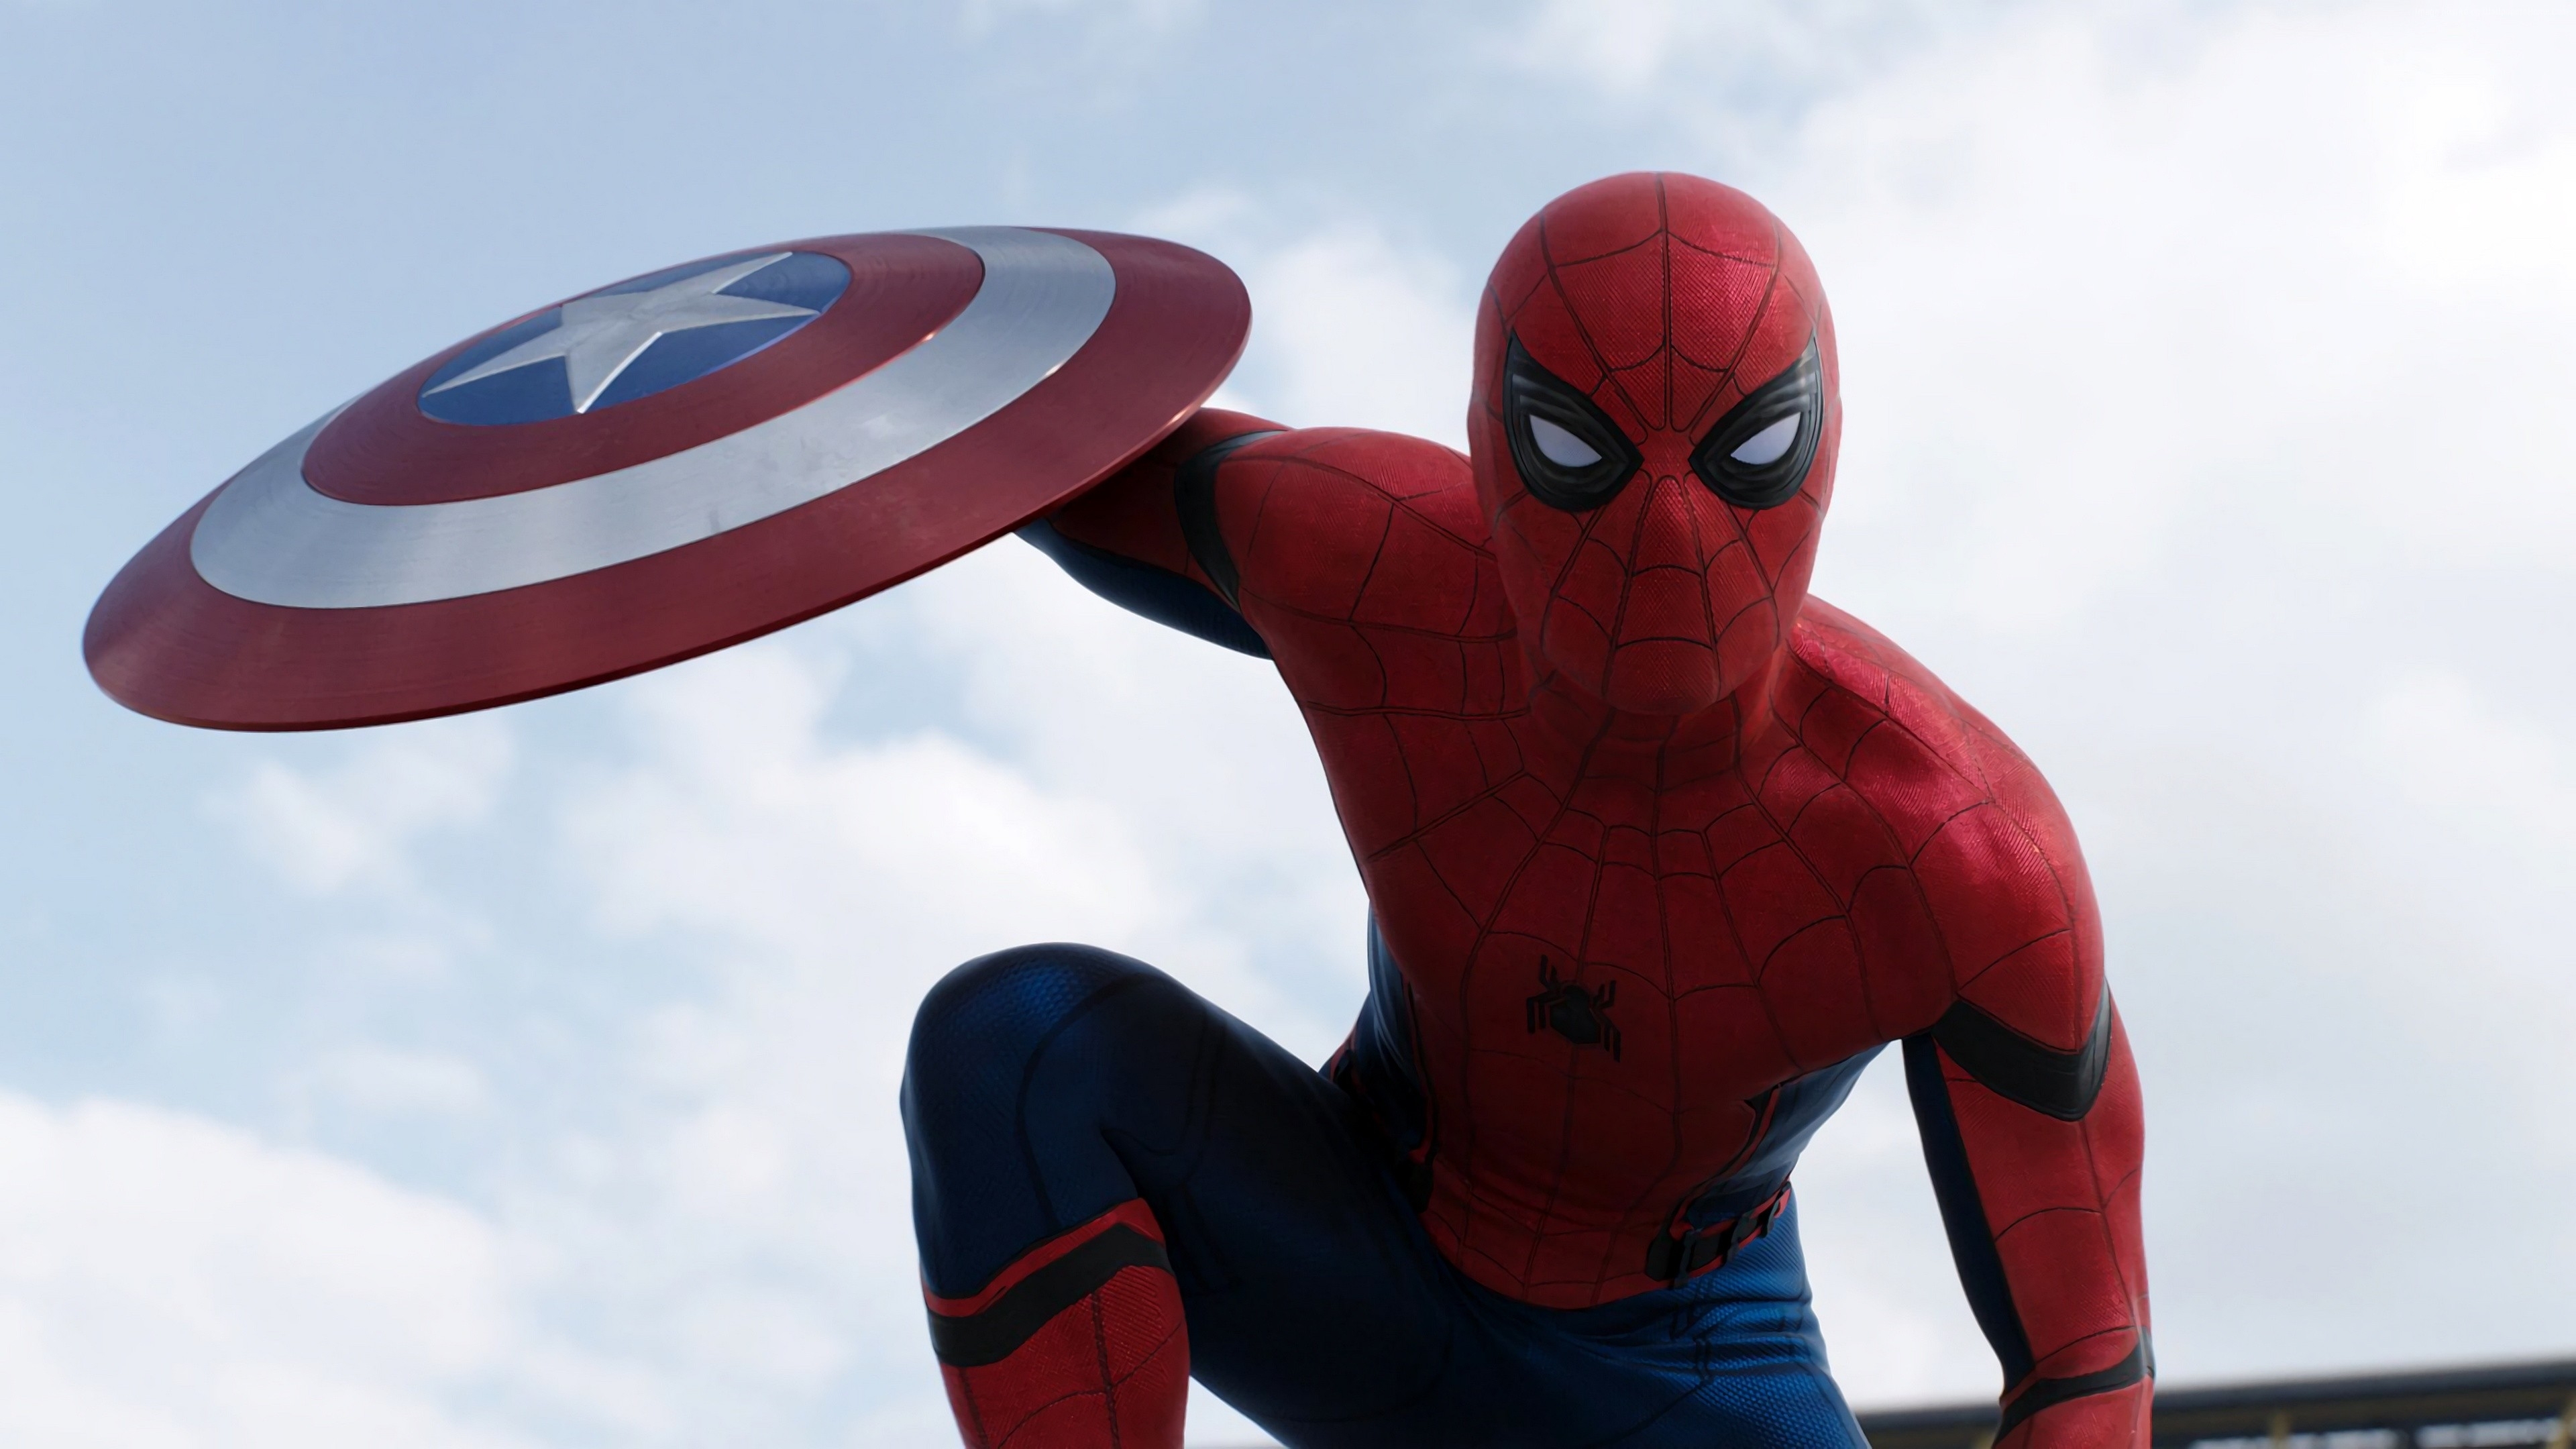 10 Top Spiderman Civil War Wallpaper FULL HD 1080p For PC Background